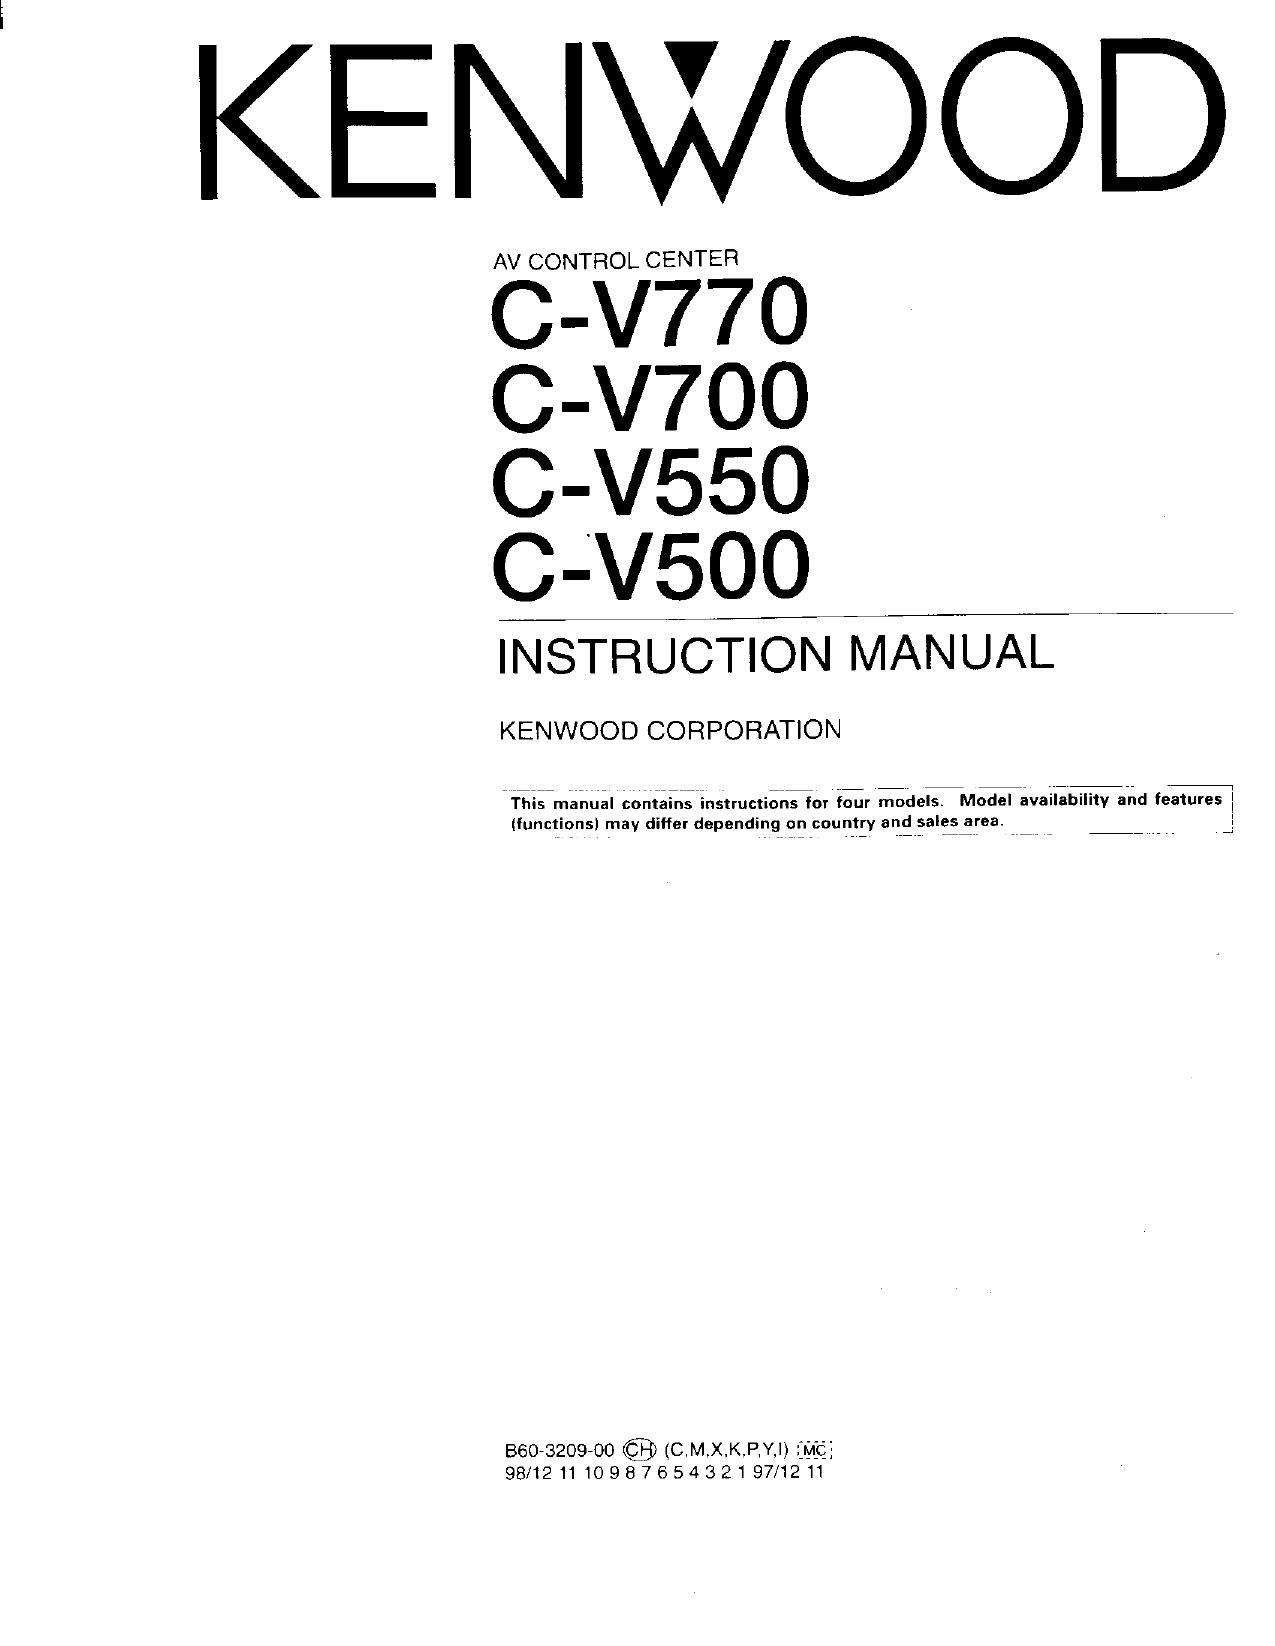 Kenwood CV 700 Owners Manual